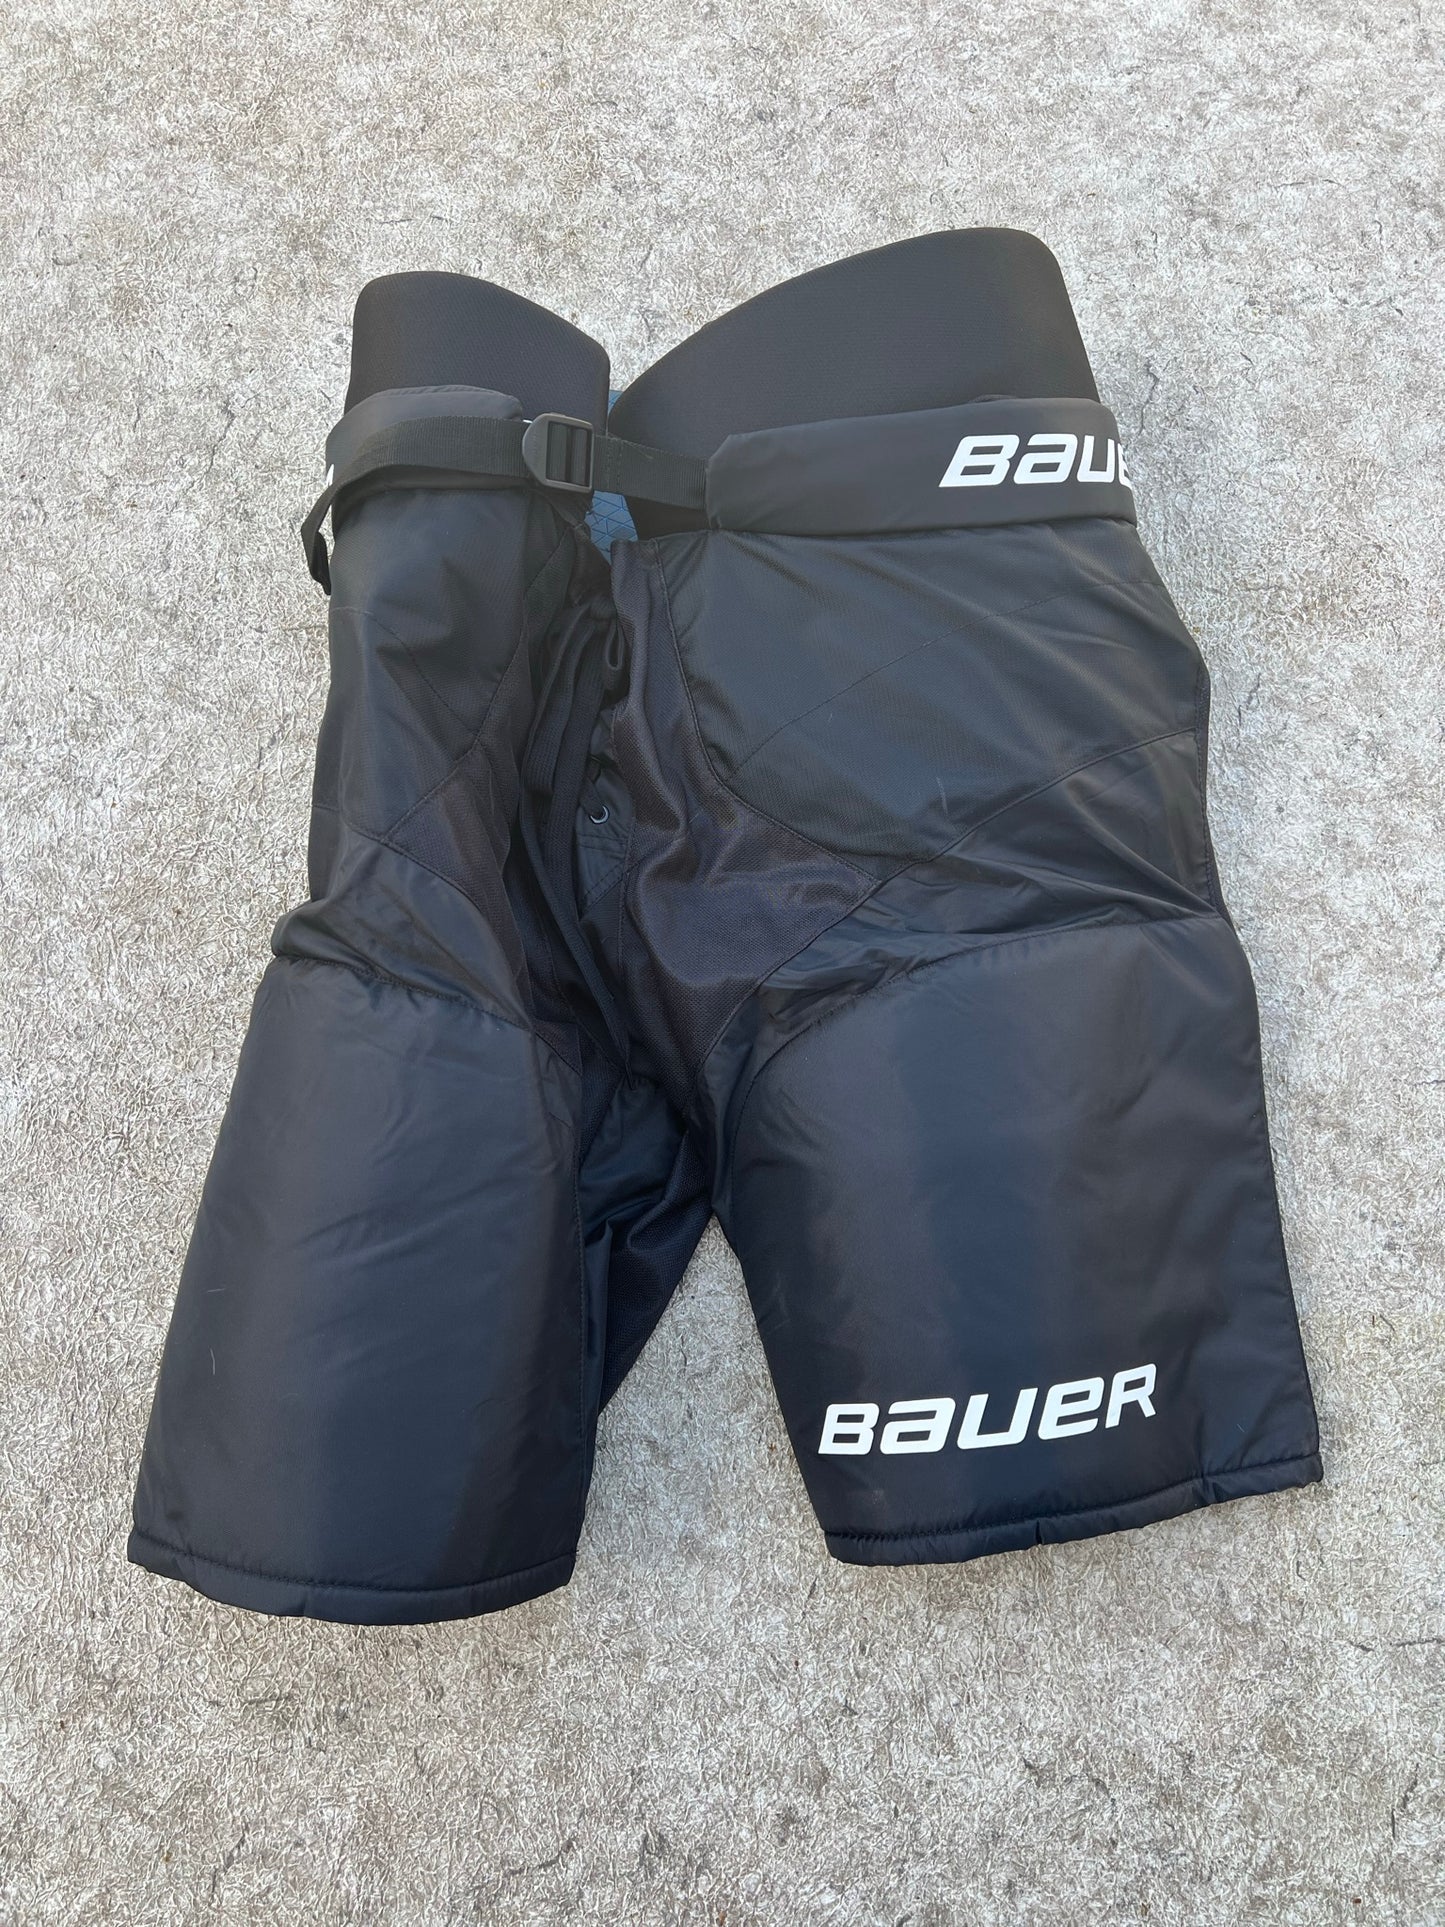 Hockey Pants Men's Size X Large Bauer Black Blue Like New